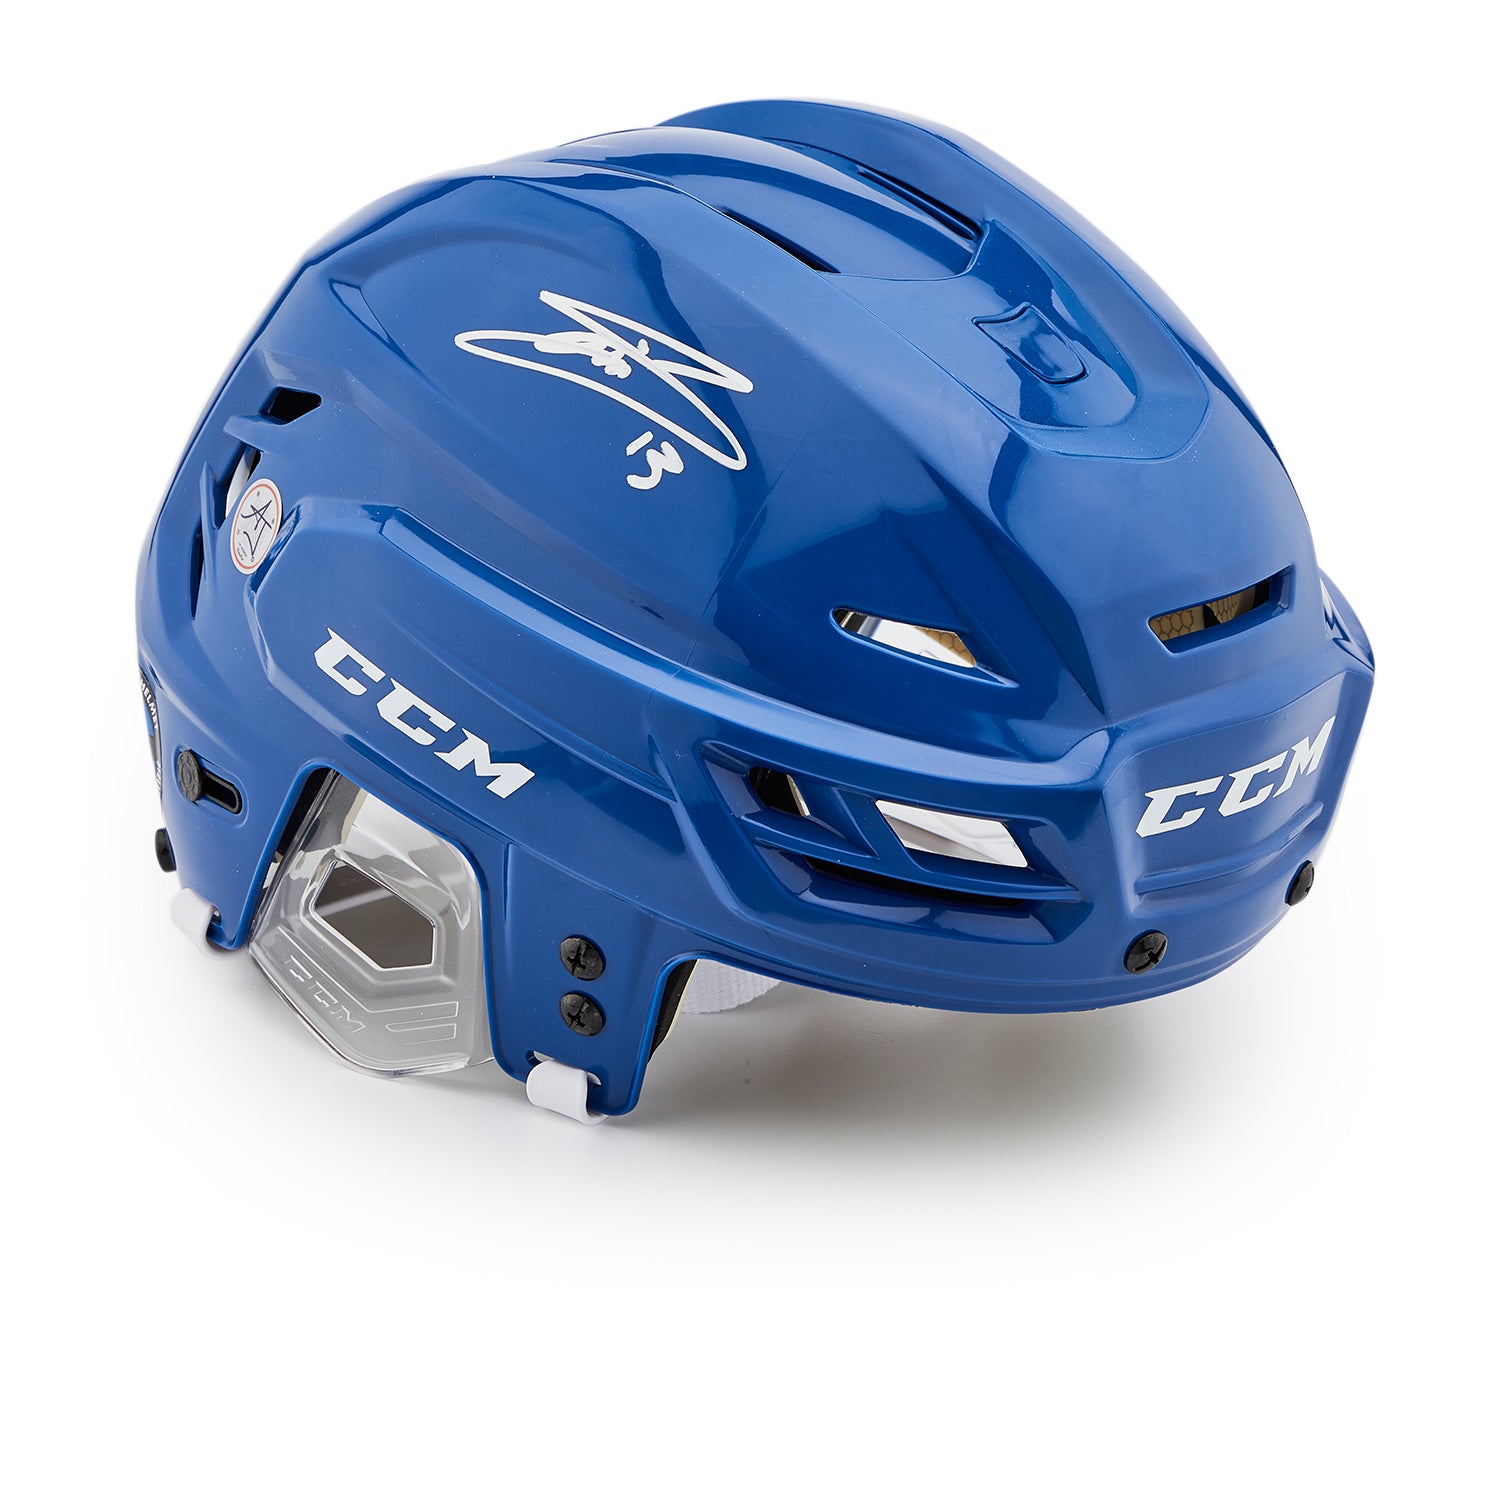 Mats Sundin Autographed Blue CCM Tacks Hockey Helmet